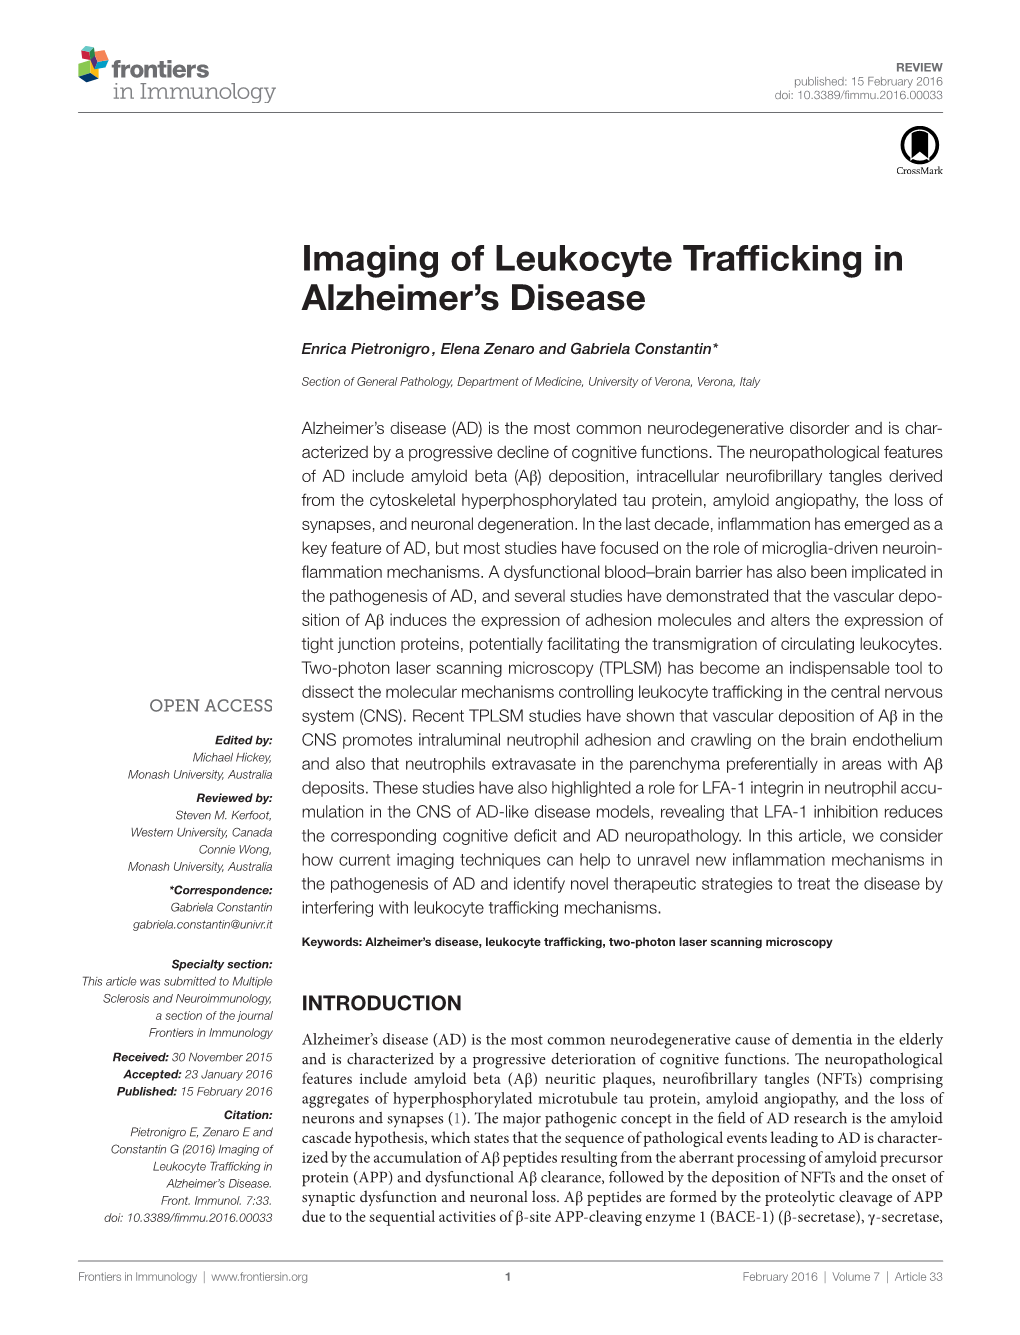 Imaging of Leukocyte Trafficking in Alzheimer's Disease